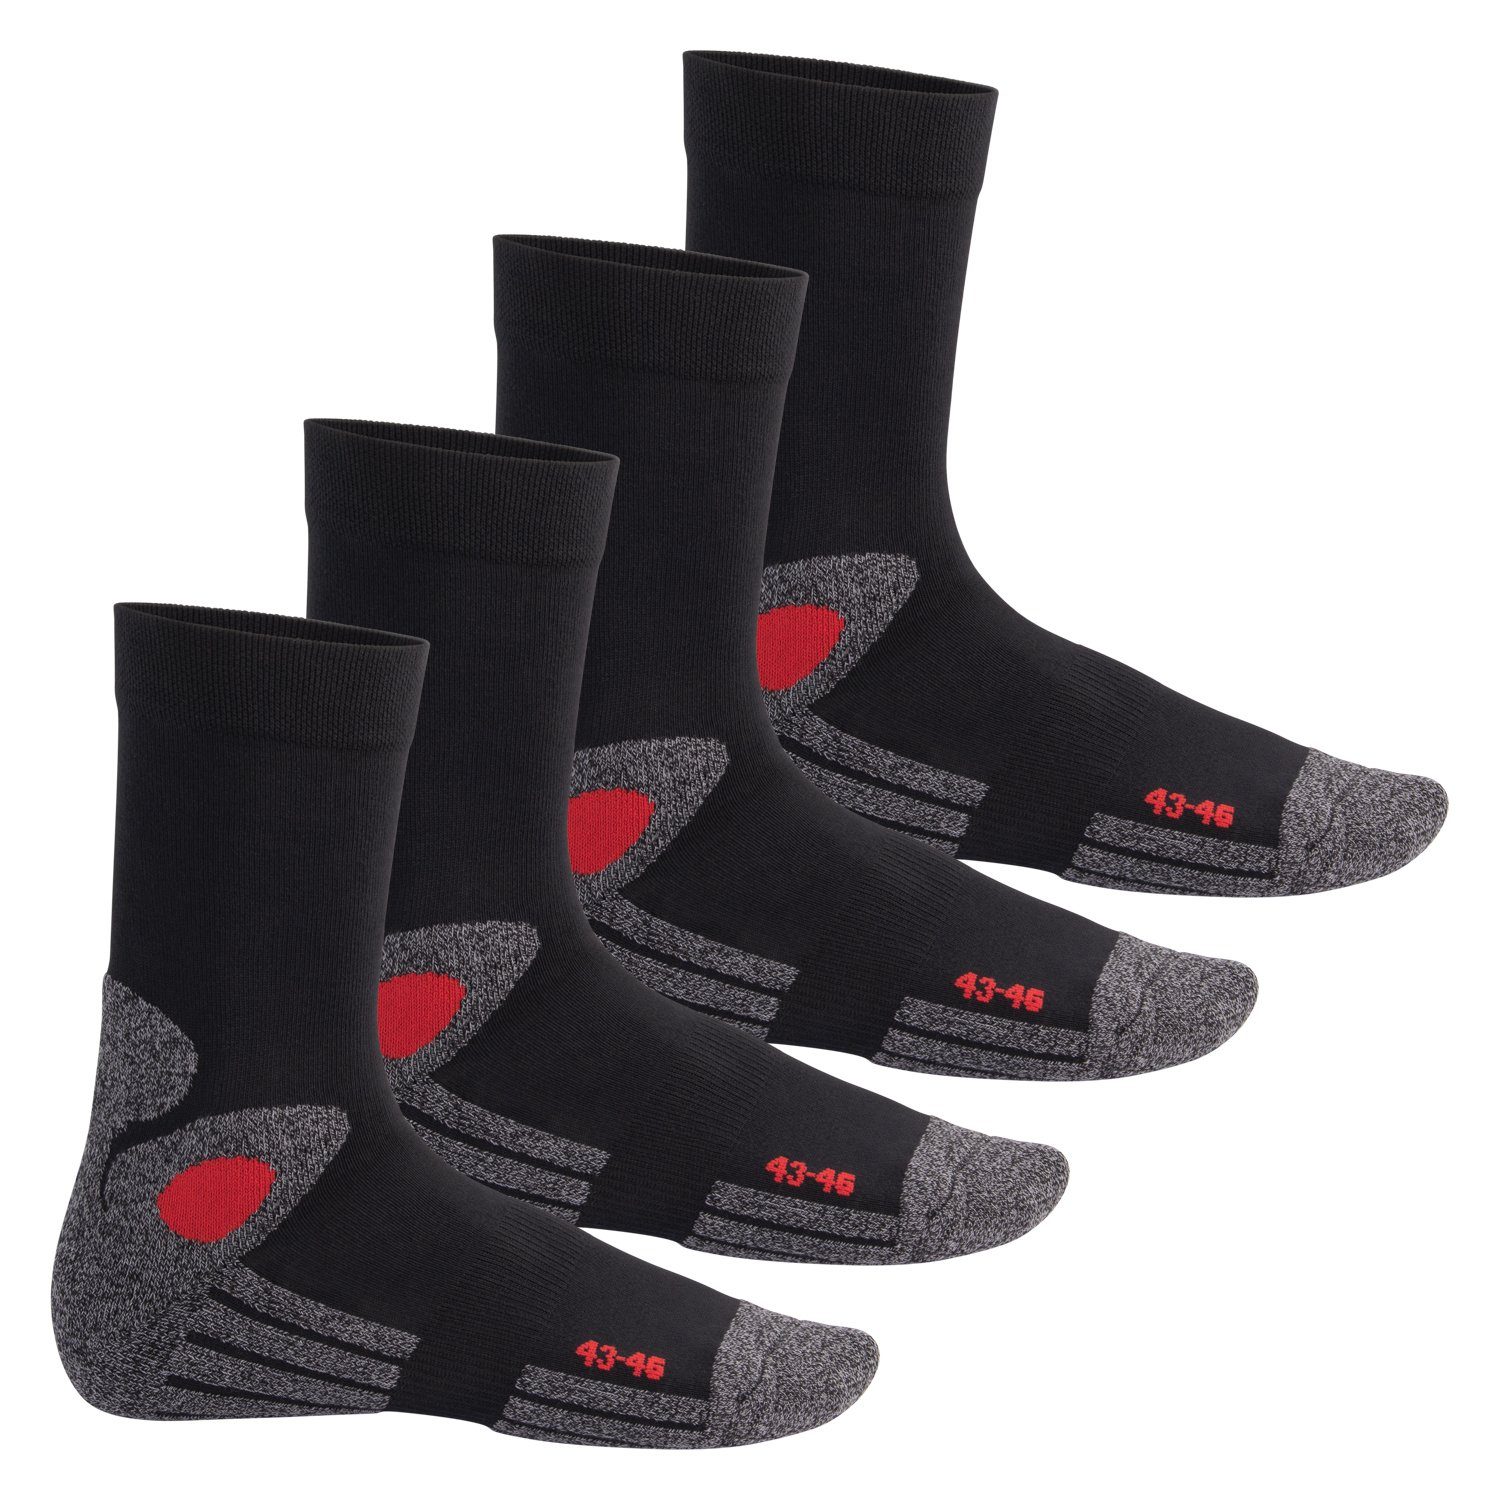 Frotteesohle Damen Herren (4 Rot Schwarz / für mit & Paar) Arbeitssocken celodoro Trekking-Socken